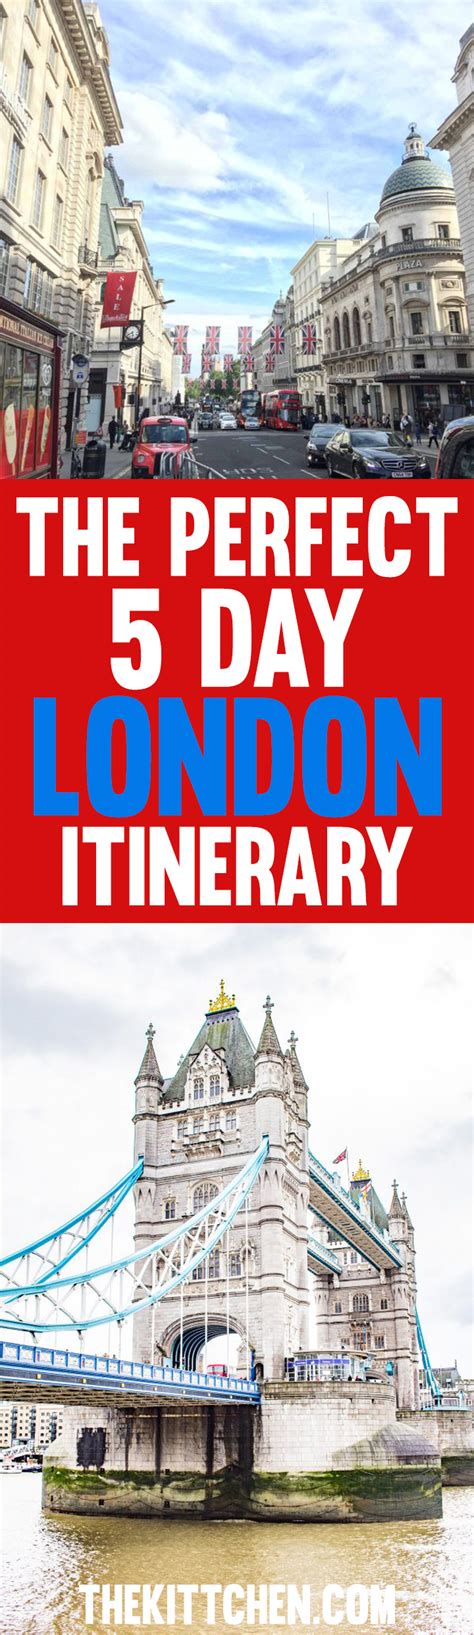 The Ultimate 5 Day London Itinerary London Travel Guide Thekittchen